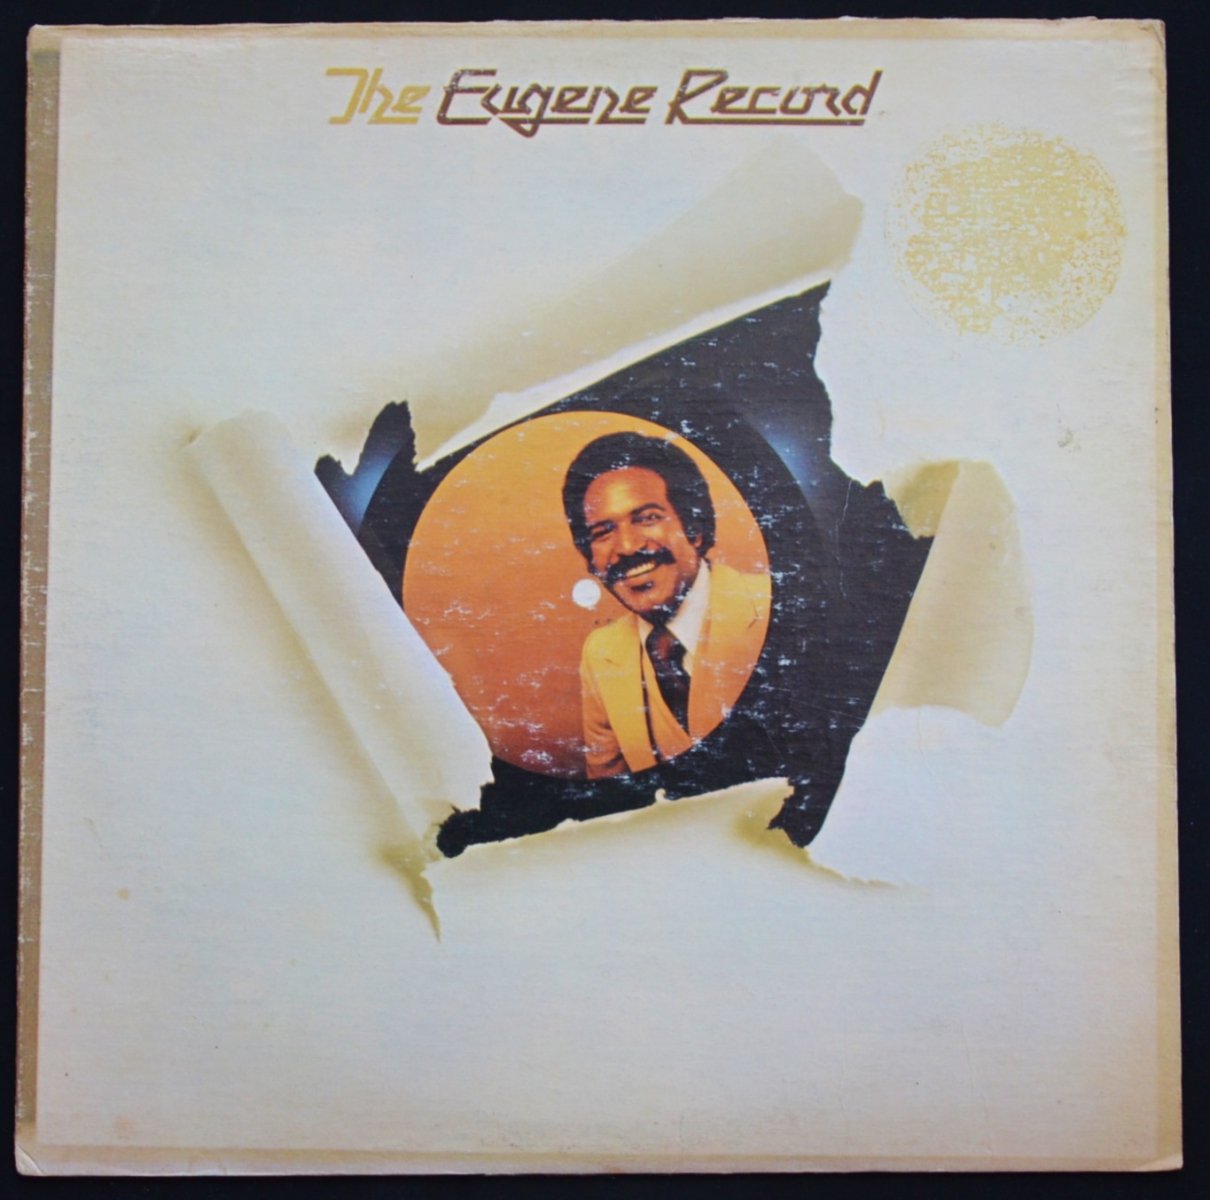 EUGENE RECORD / THE EUGENE RECORD (LP)